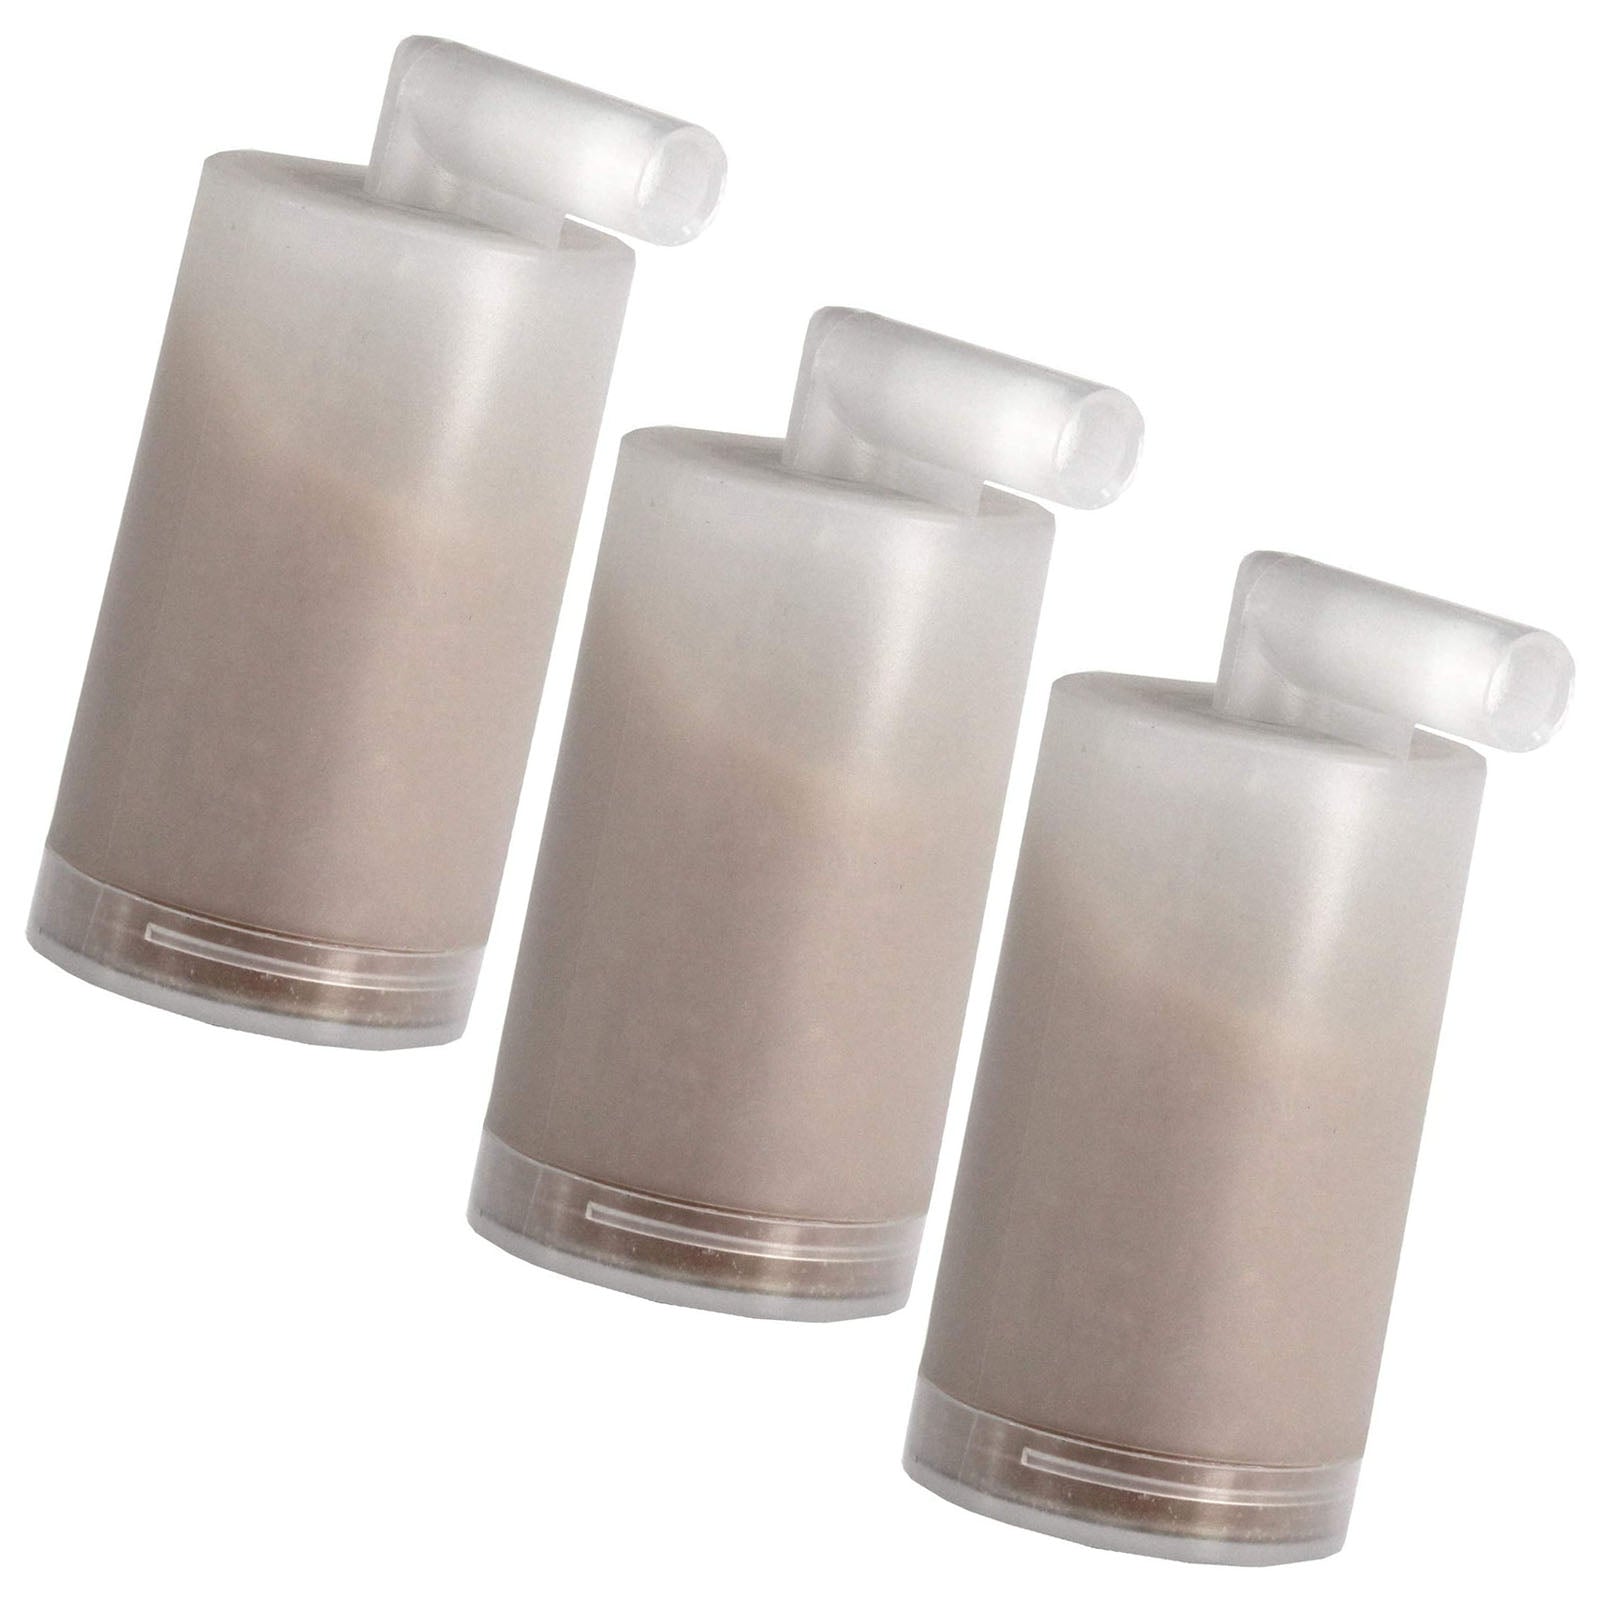 Anti Limescale Calcium Filter Cartridge for ALDI DELTA Steam Iron (Pack of 3)